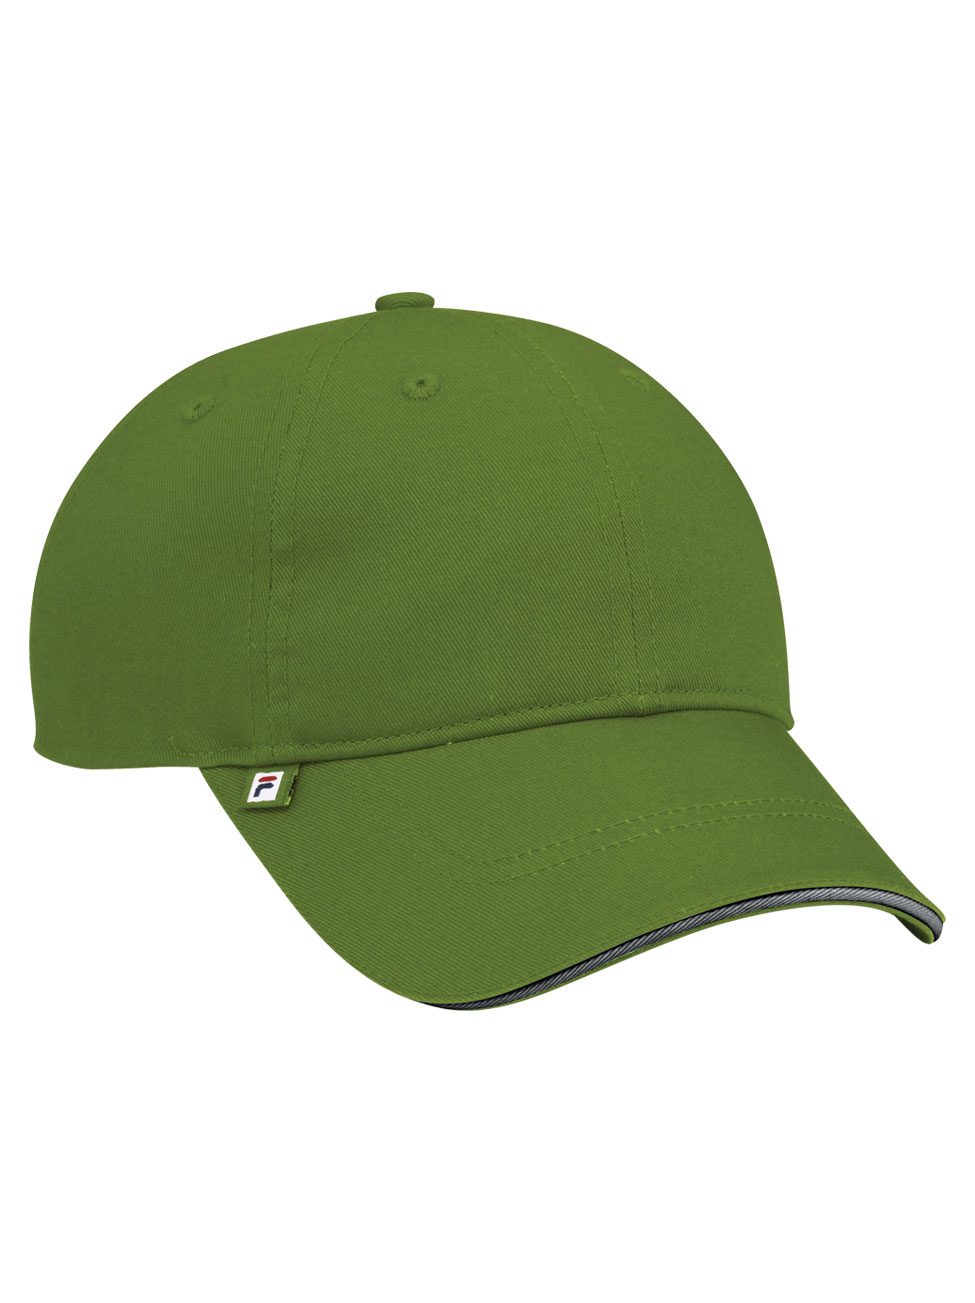 Fila Torino Baseball Hat #FA1010 Pine Green